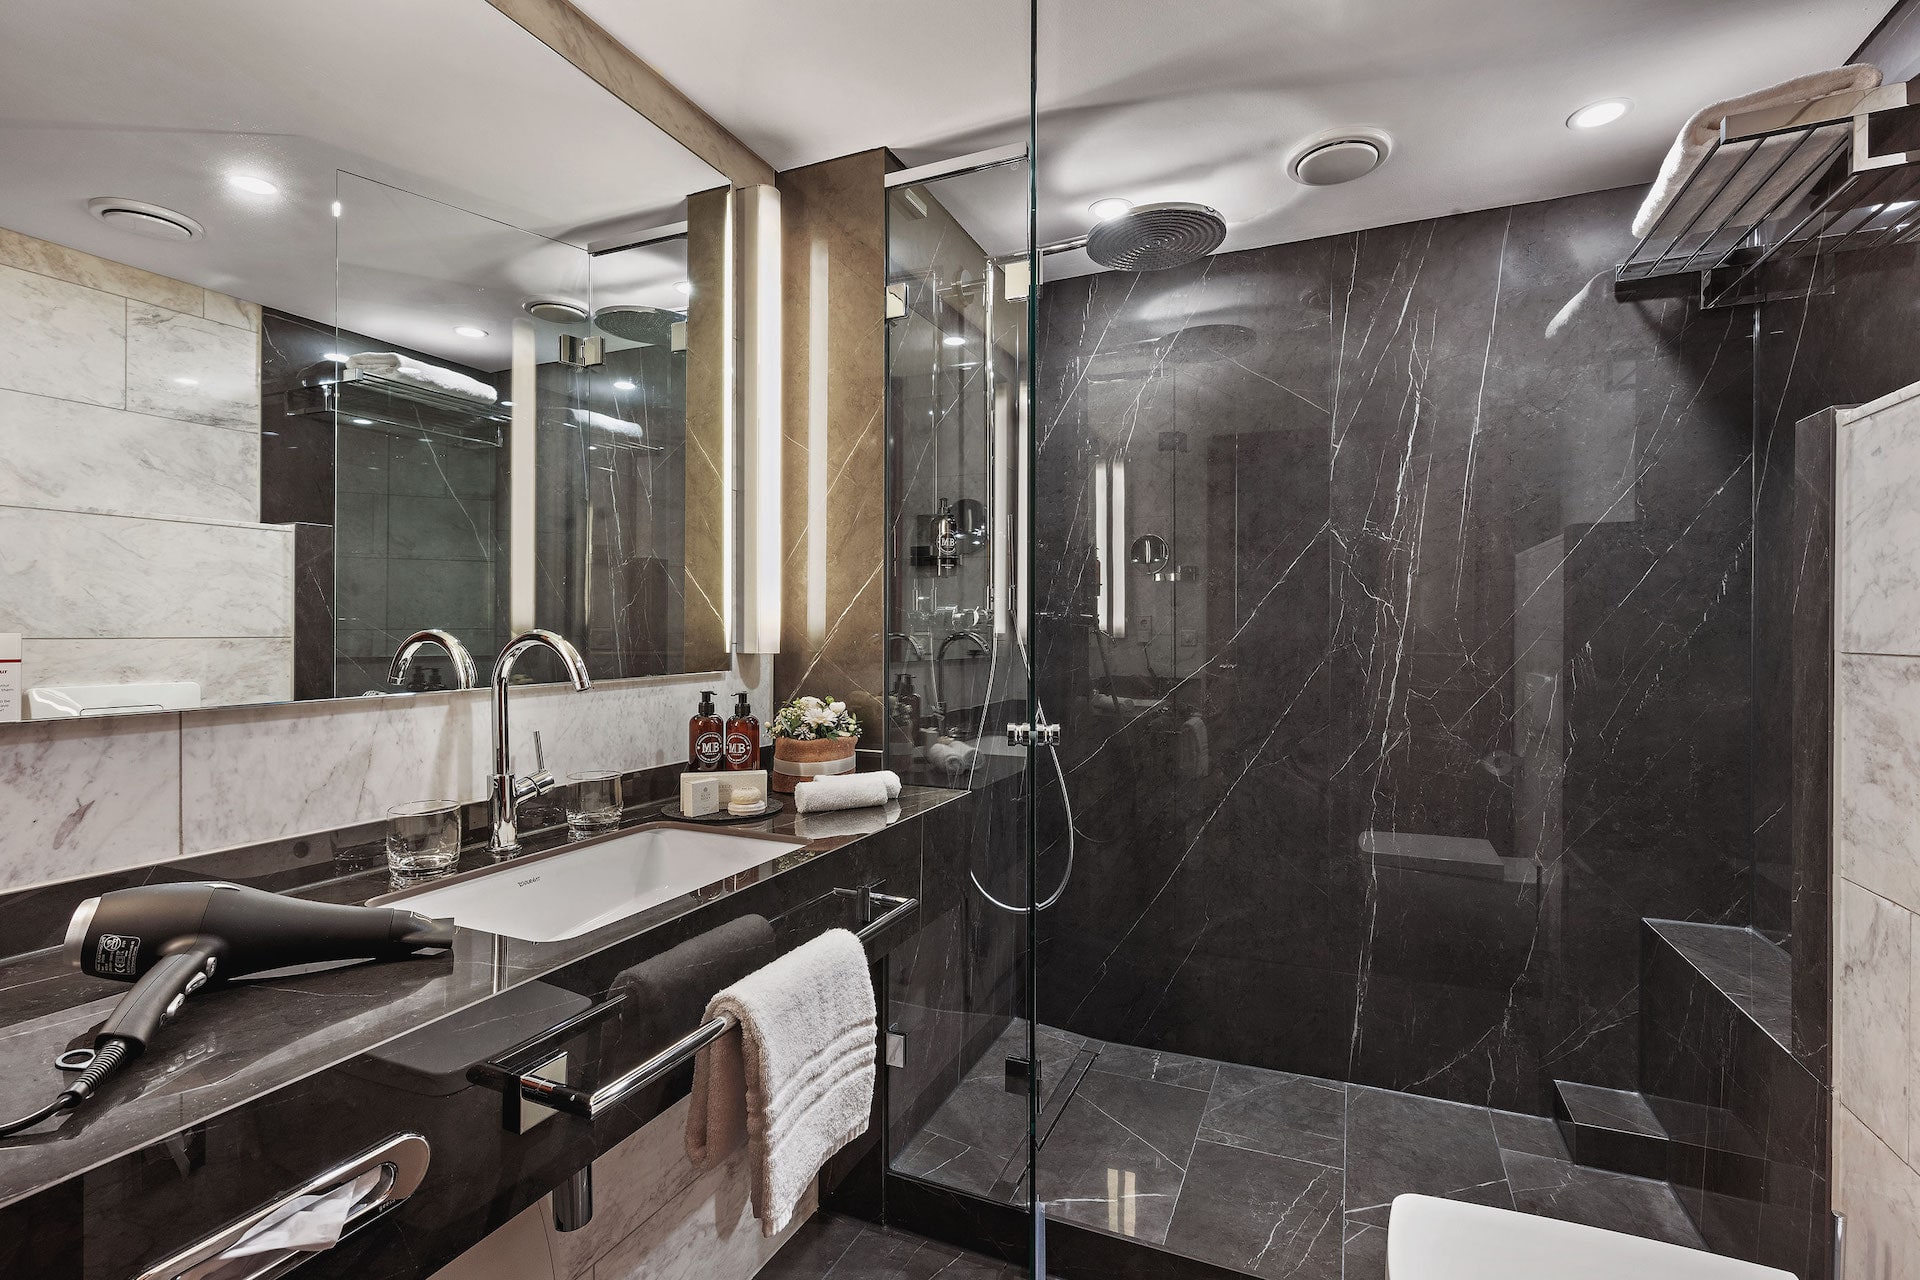 Comfort room bathroom with shower at the hotel Engelsburg in Recklinghausen